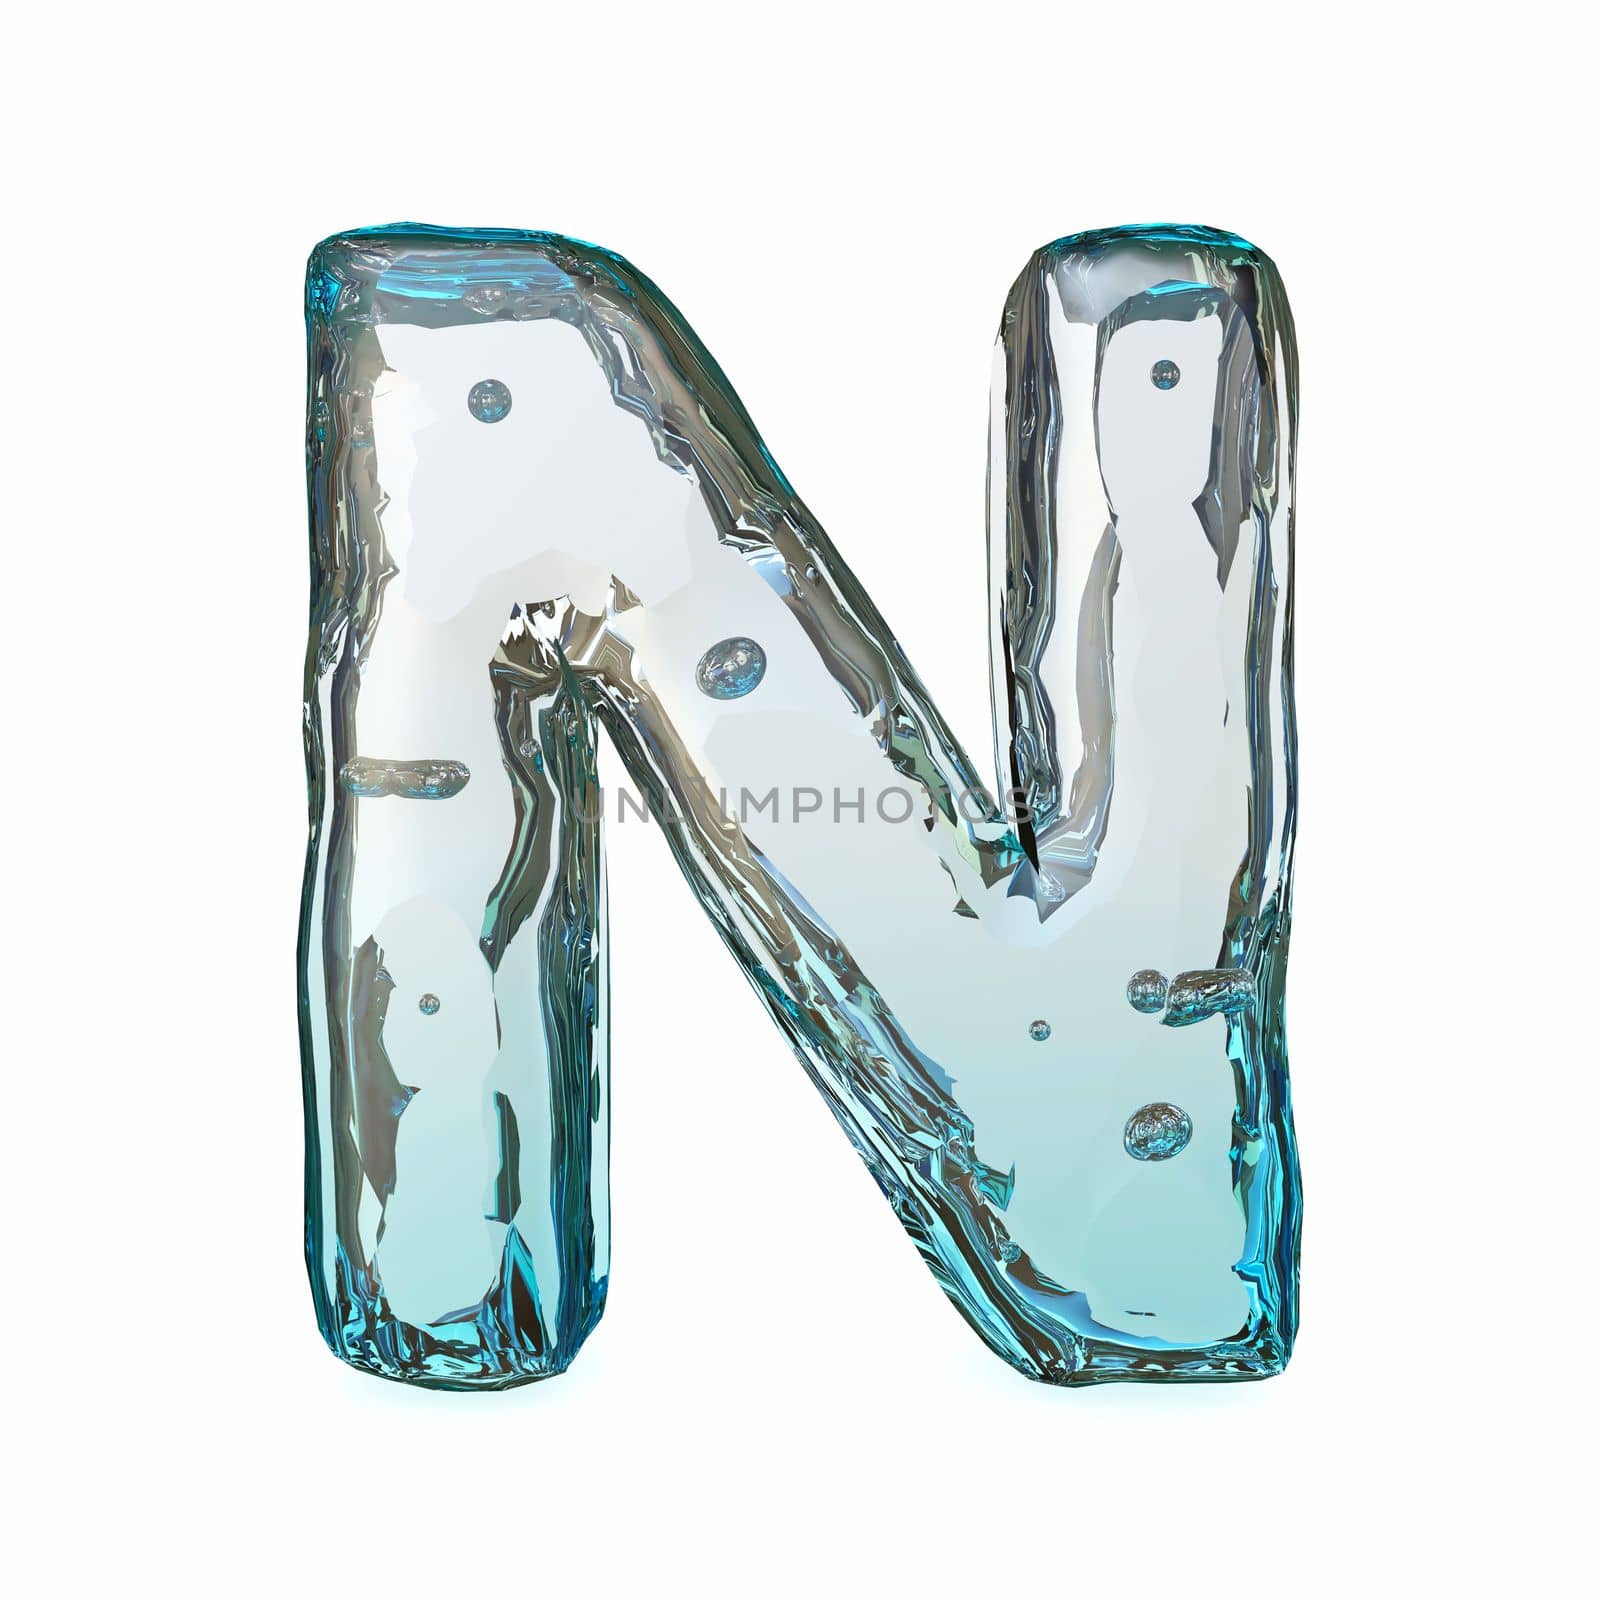 Blue ice font Letter N 3D rendering illustration isolated on white background